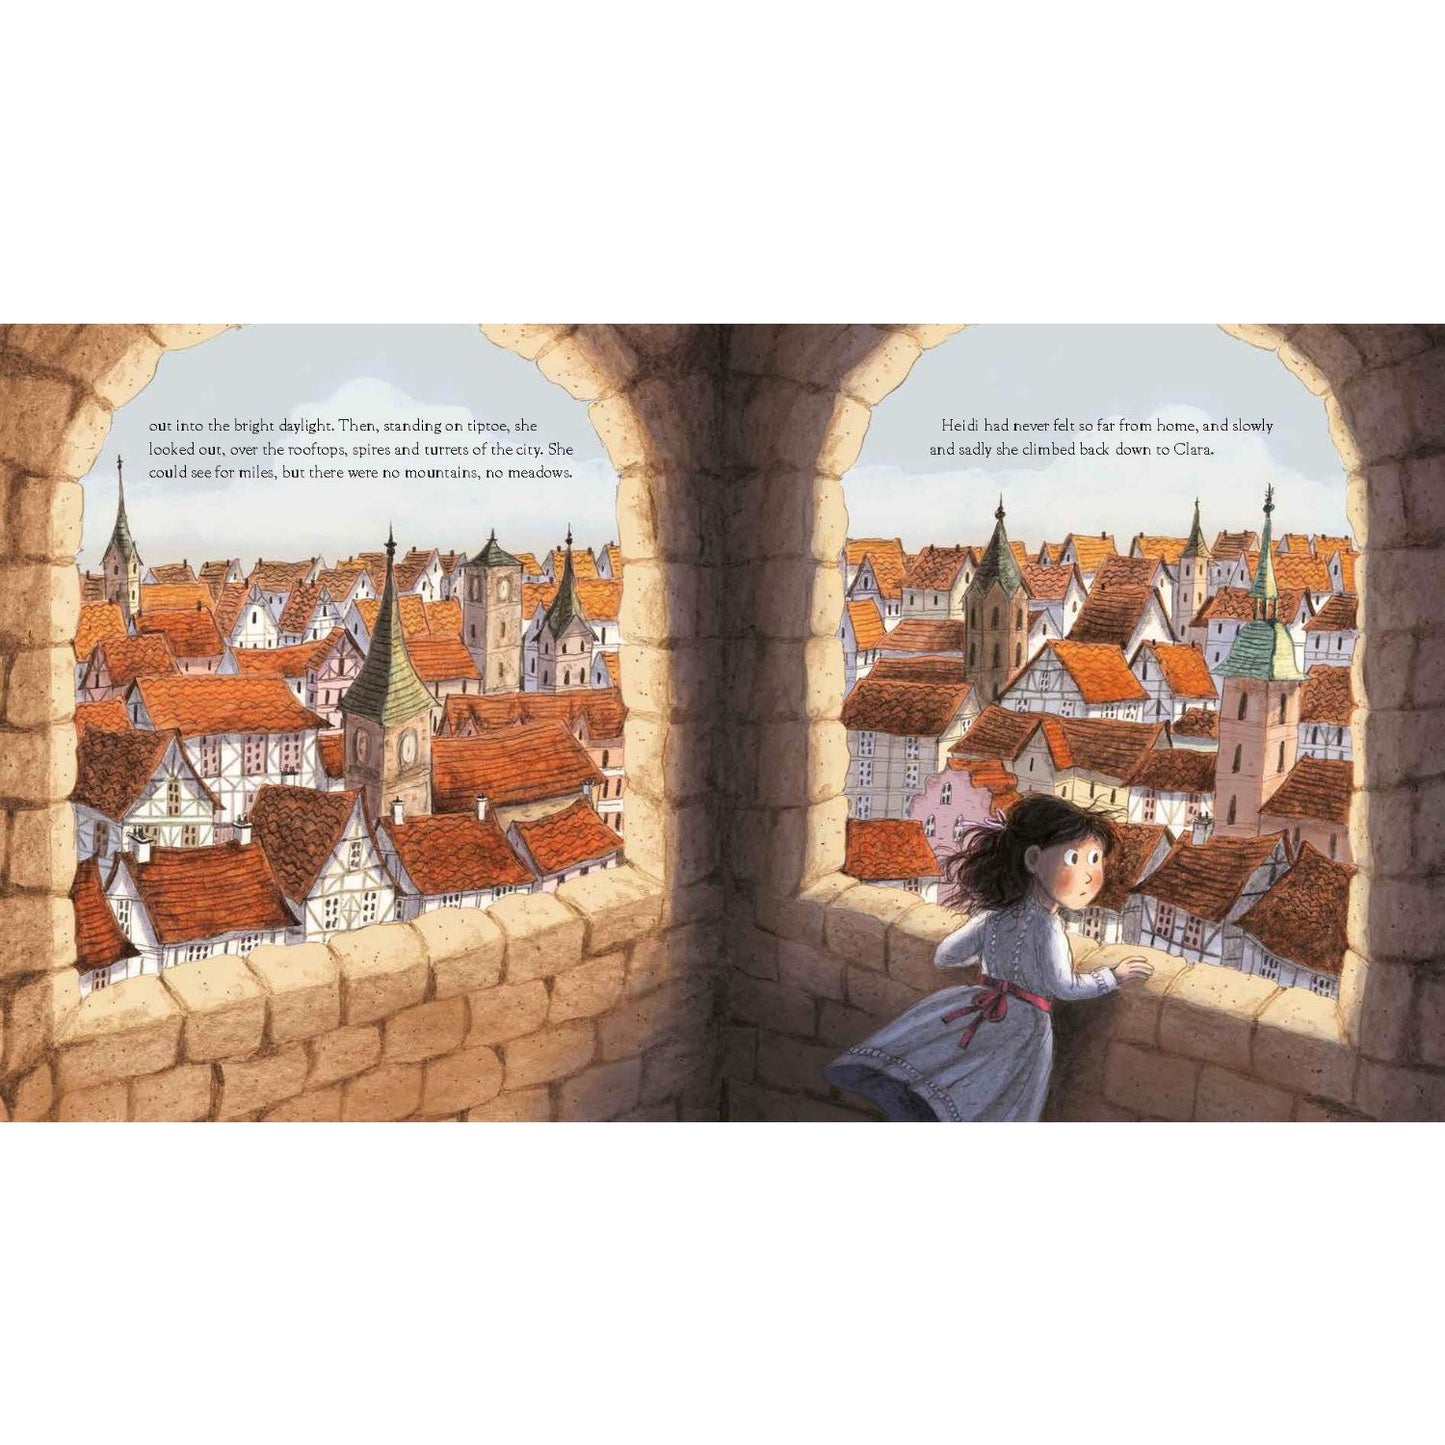 Heidi | Hardcover | Illustrated Gift Edition | Classic Children's Books